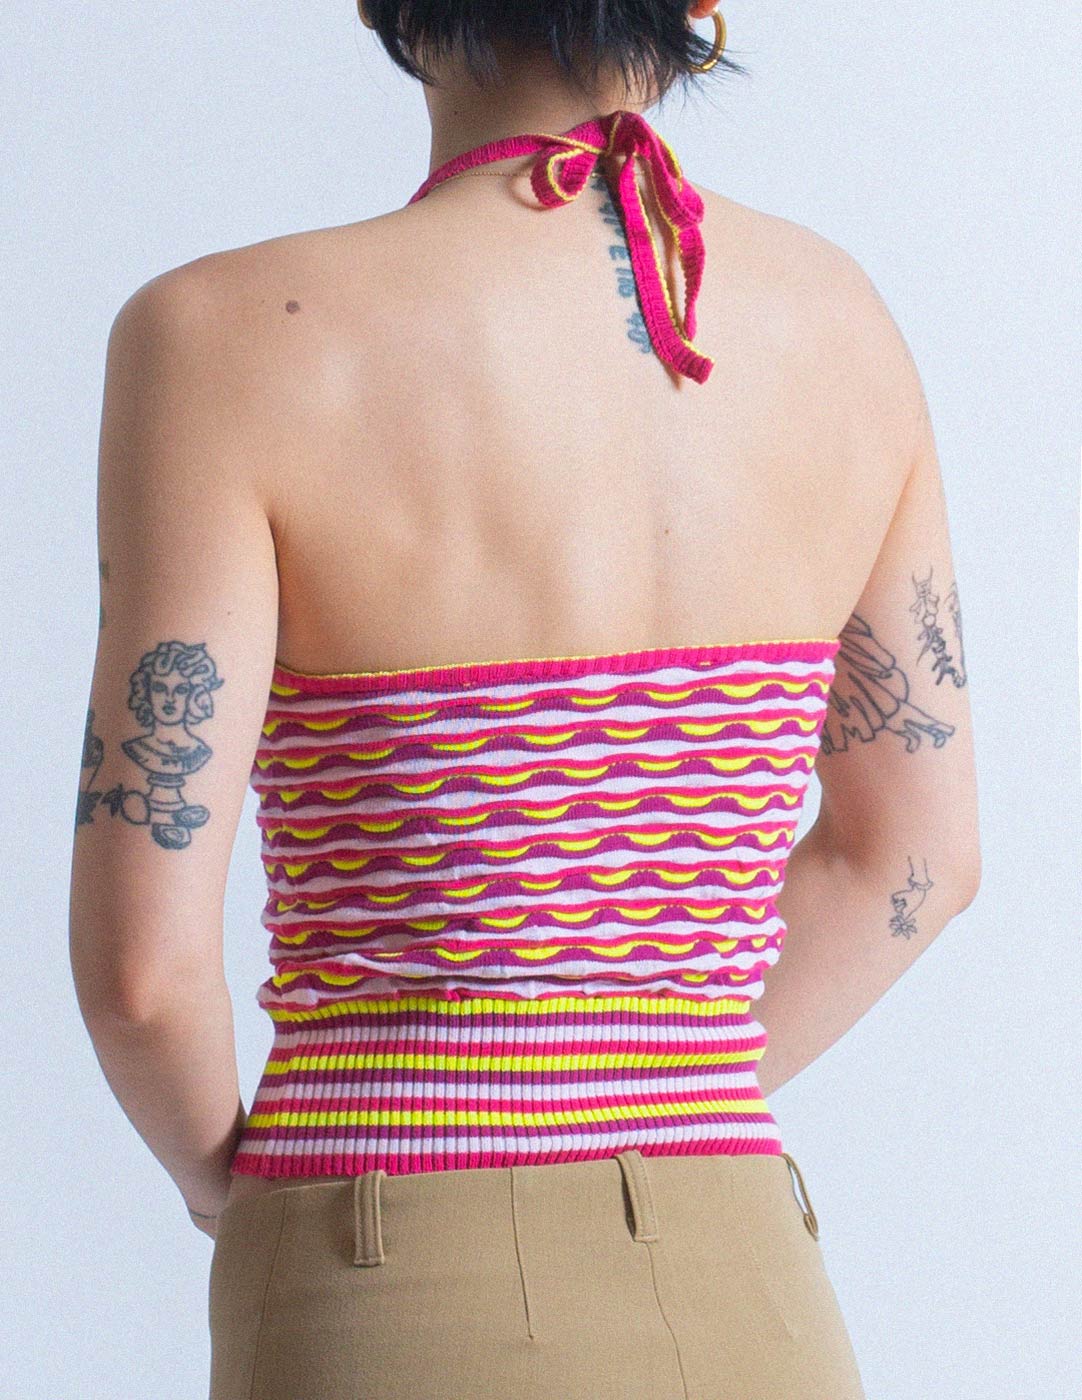 Diesel ripple knit halter top back detail